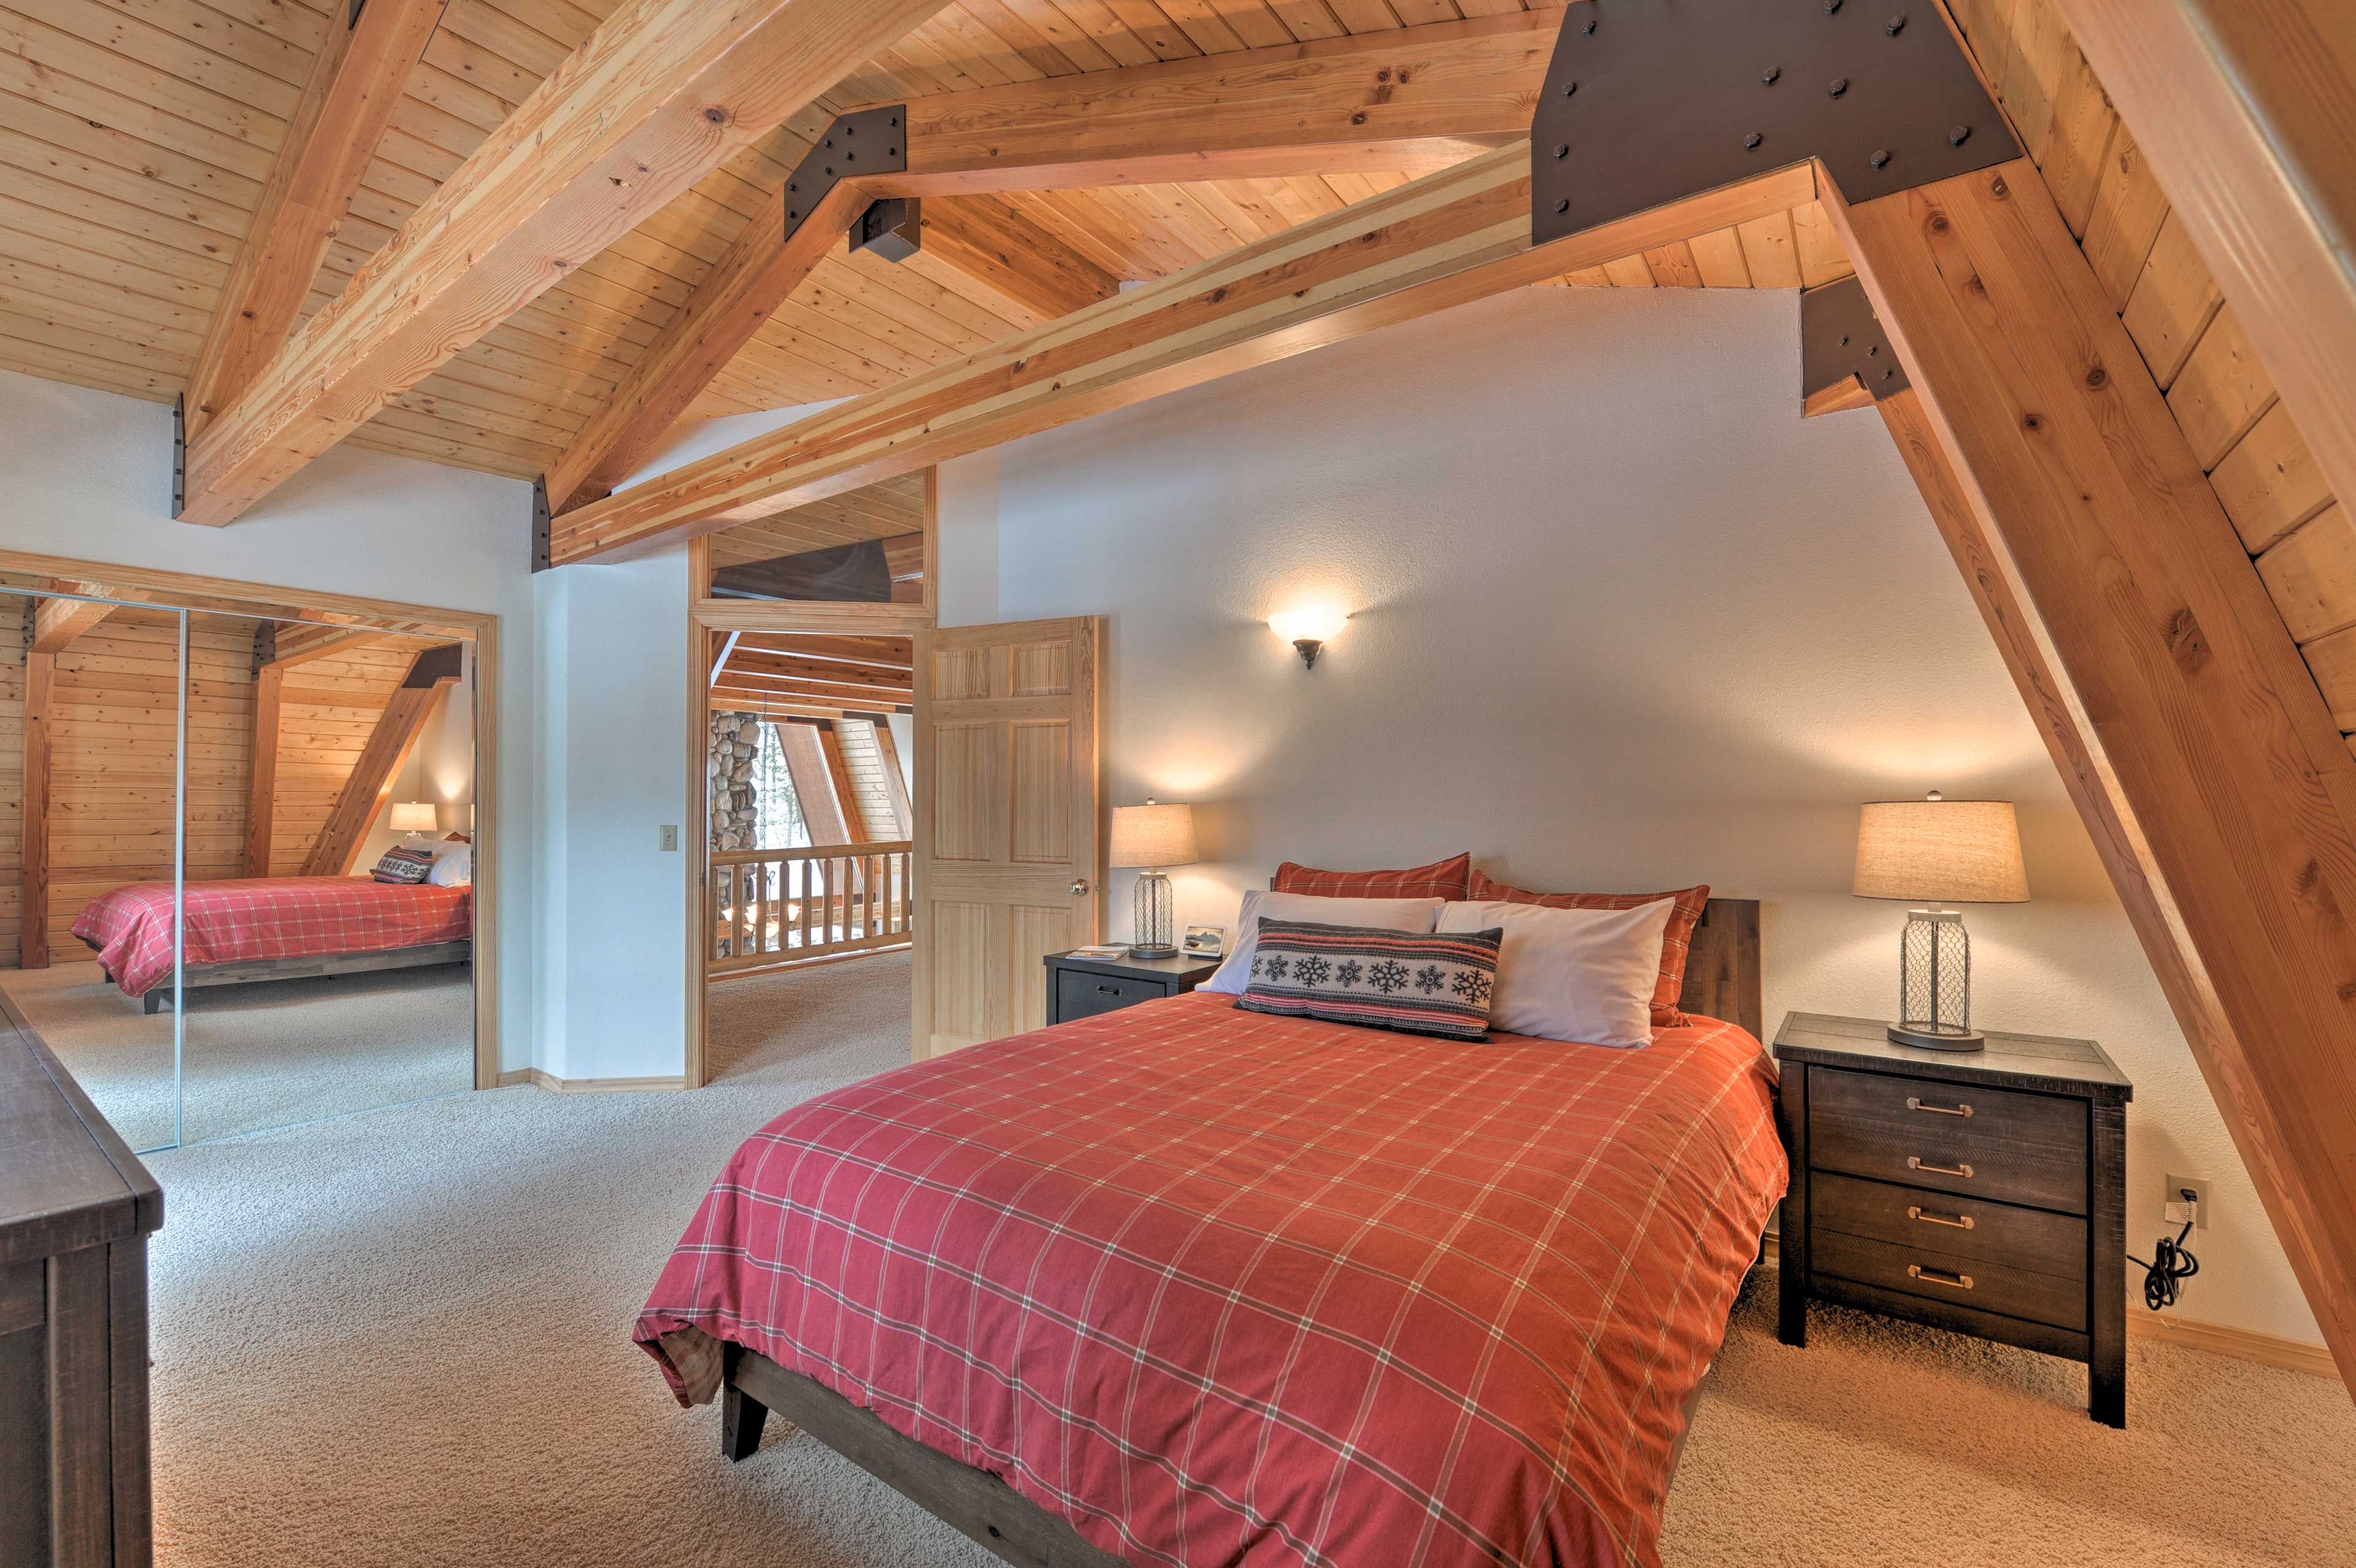 Wild Huckleberry Alpine Cabin: Fireplace & Deck!